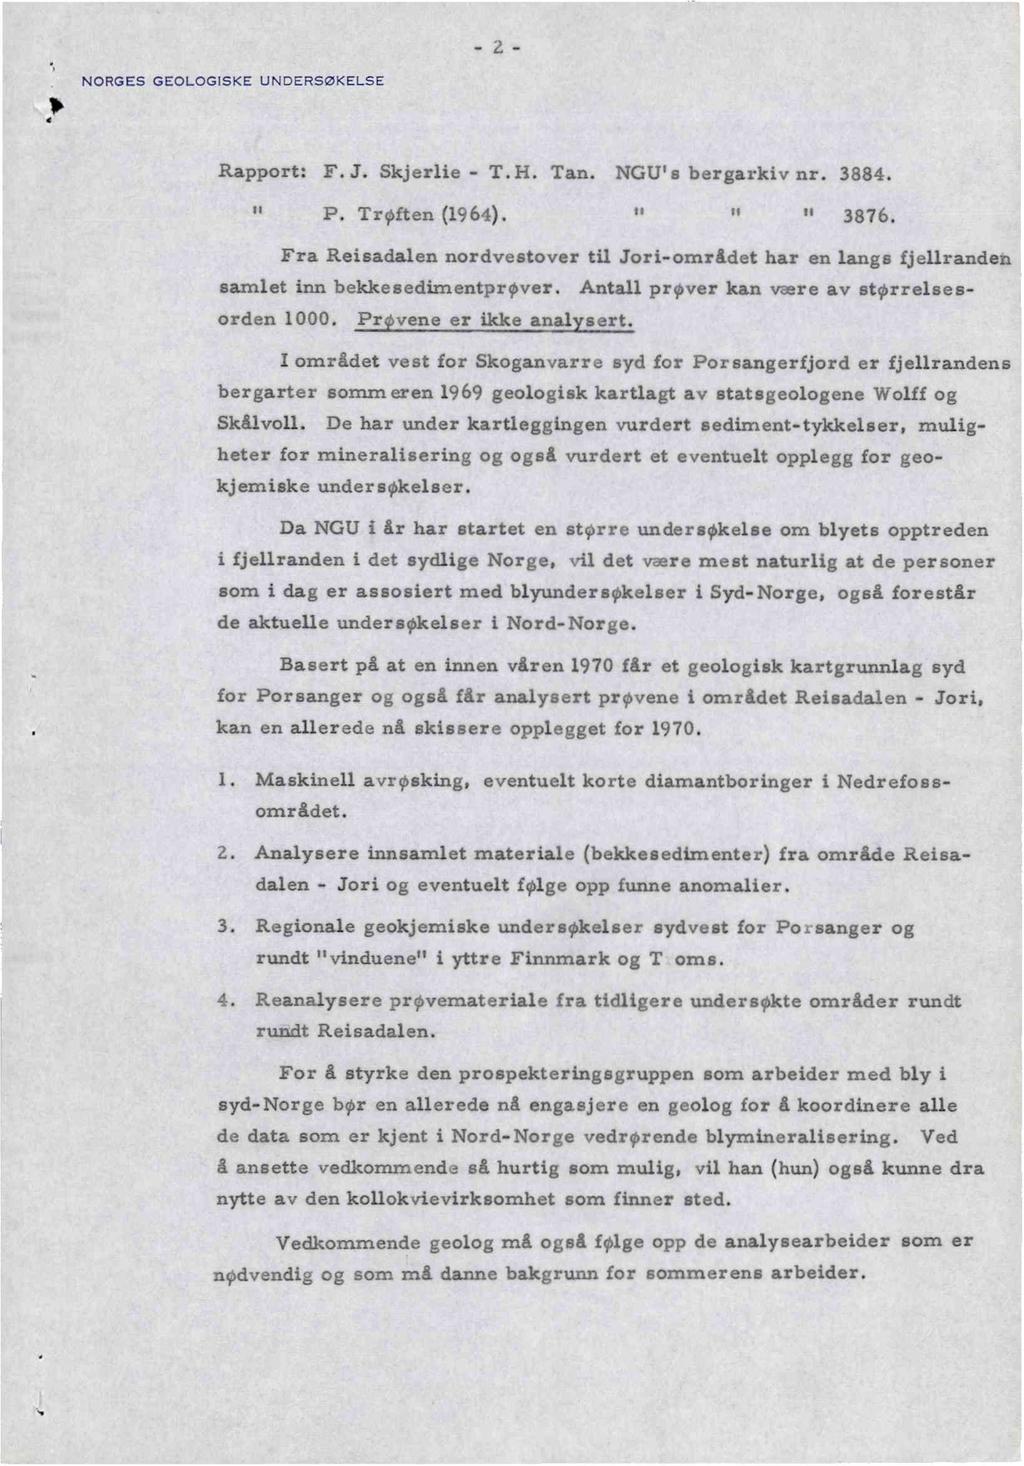 - 2 - NORGES GEOLOGISKE UNDERSØKELSE Rapport: F.J. Skjerlie - T.H. Tan. NGU' s bergarkiv nr. 3884. 11 P. Trøften (1964). 11 11 " 3876.